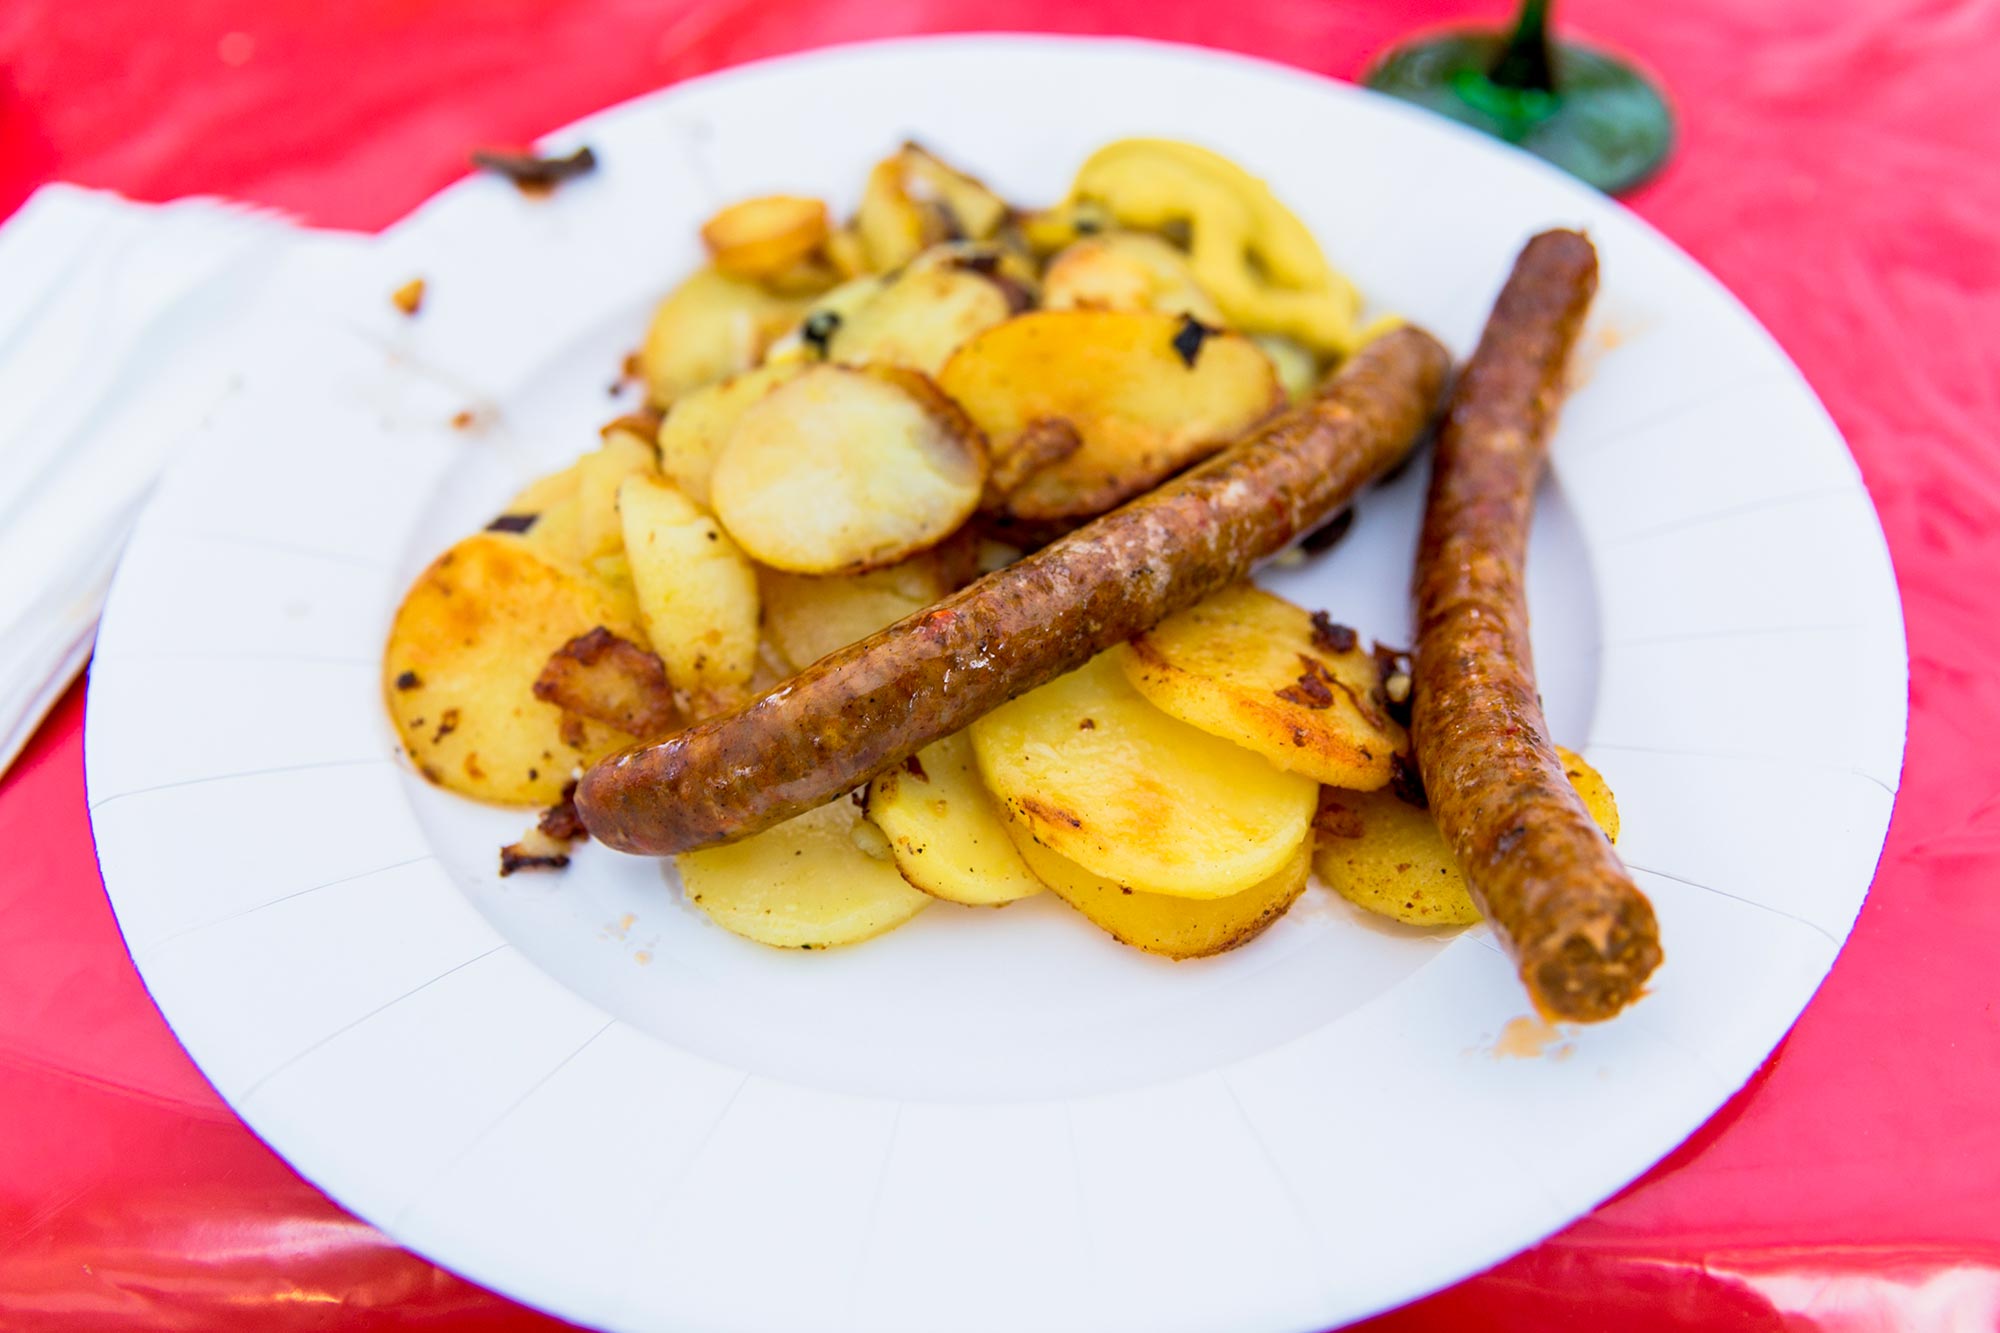 sausage wurst potatoes frankfurt